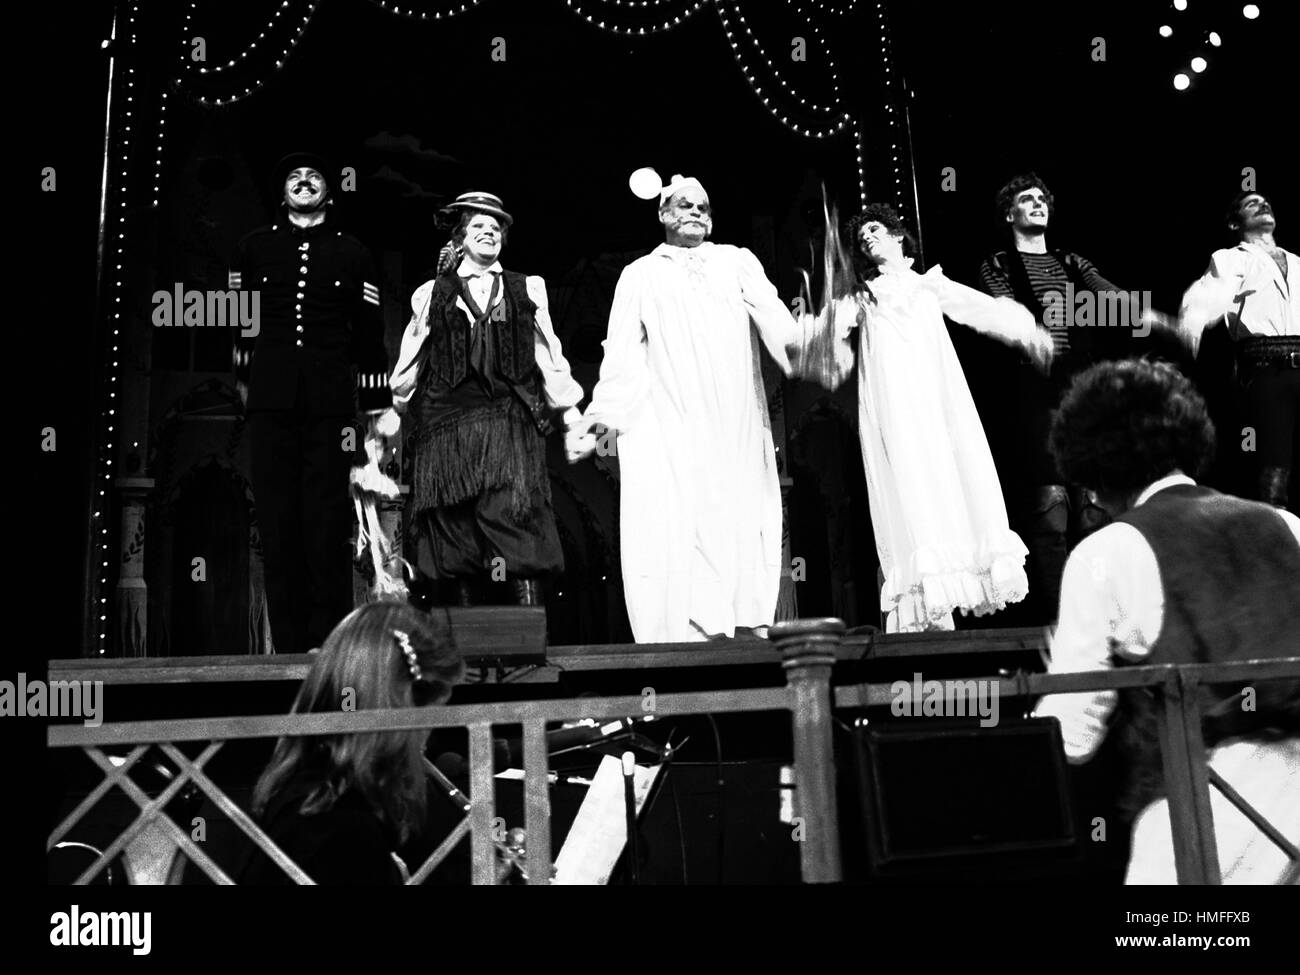 Curtain Call pour les pirates de Penzance au Minskoff Theater à New York. Cast : Kaye Ballard, Maureen McGovern, Rex Smith & Kevin Kline. Septembre 1981 Banque D'Images